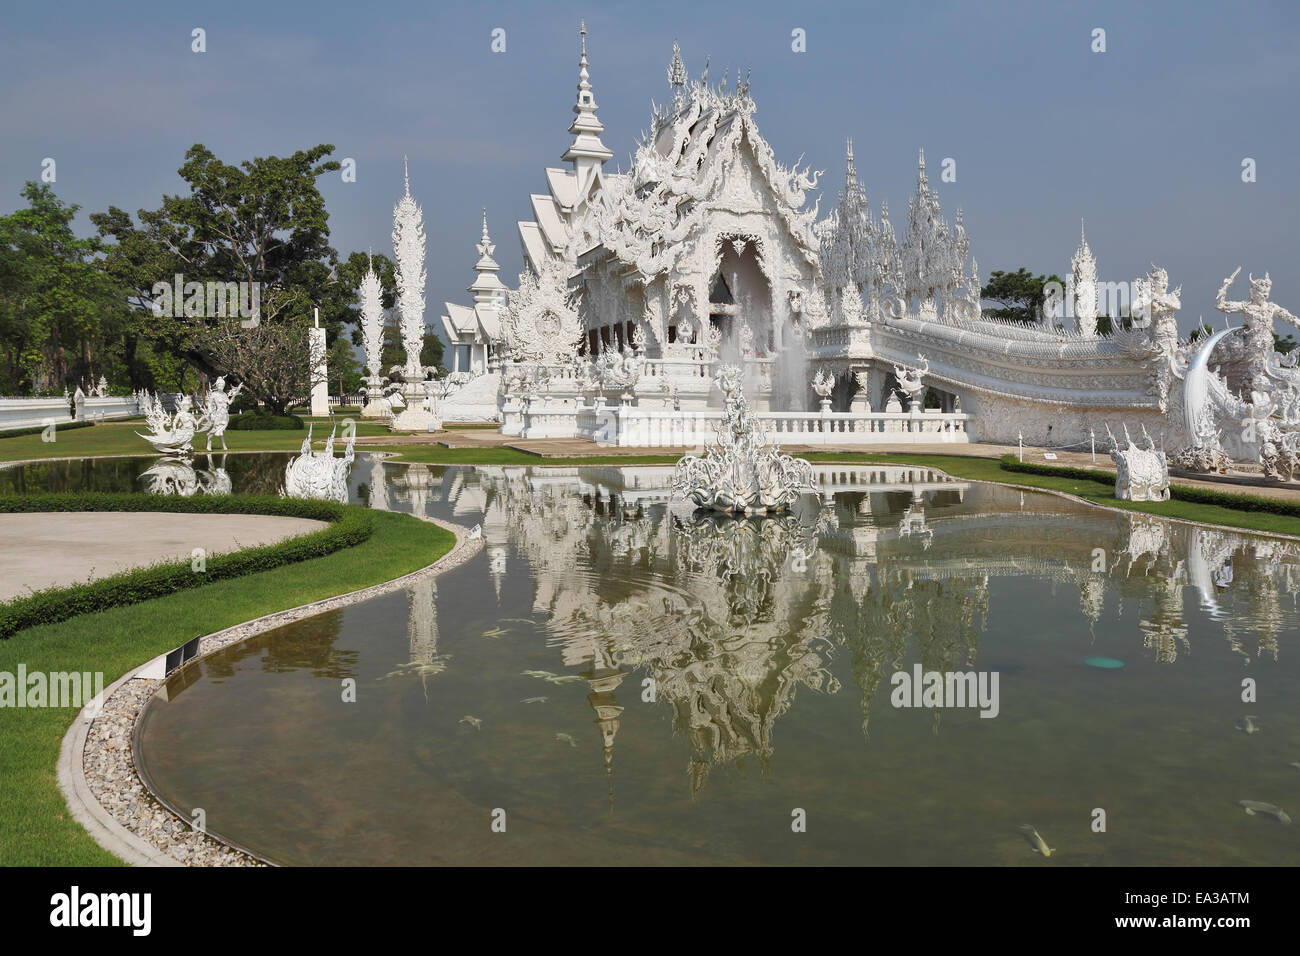 White fabulous palace in Southeast Asia Stock Photo